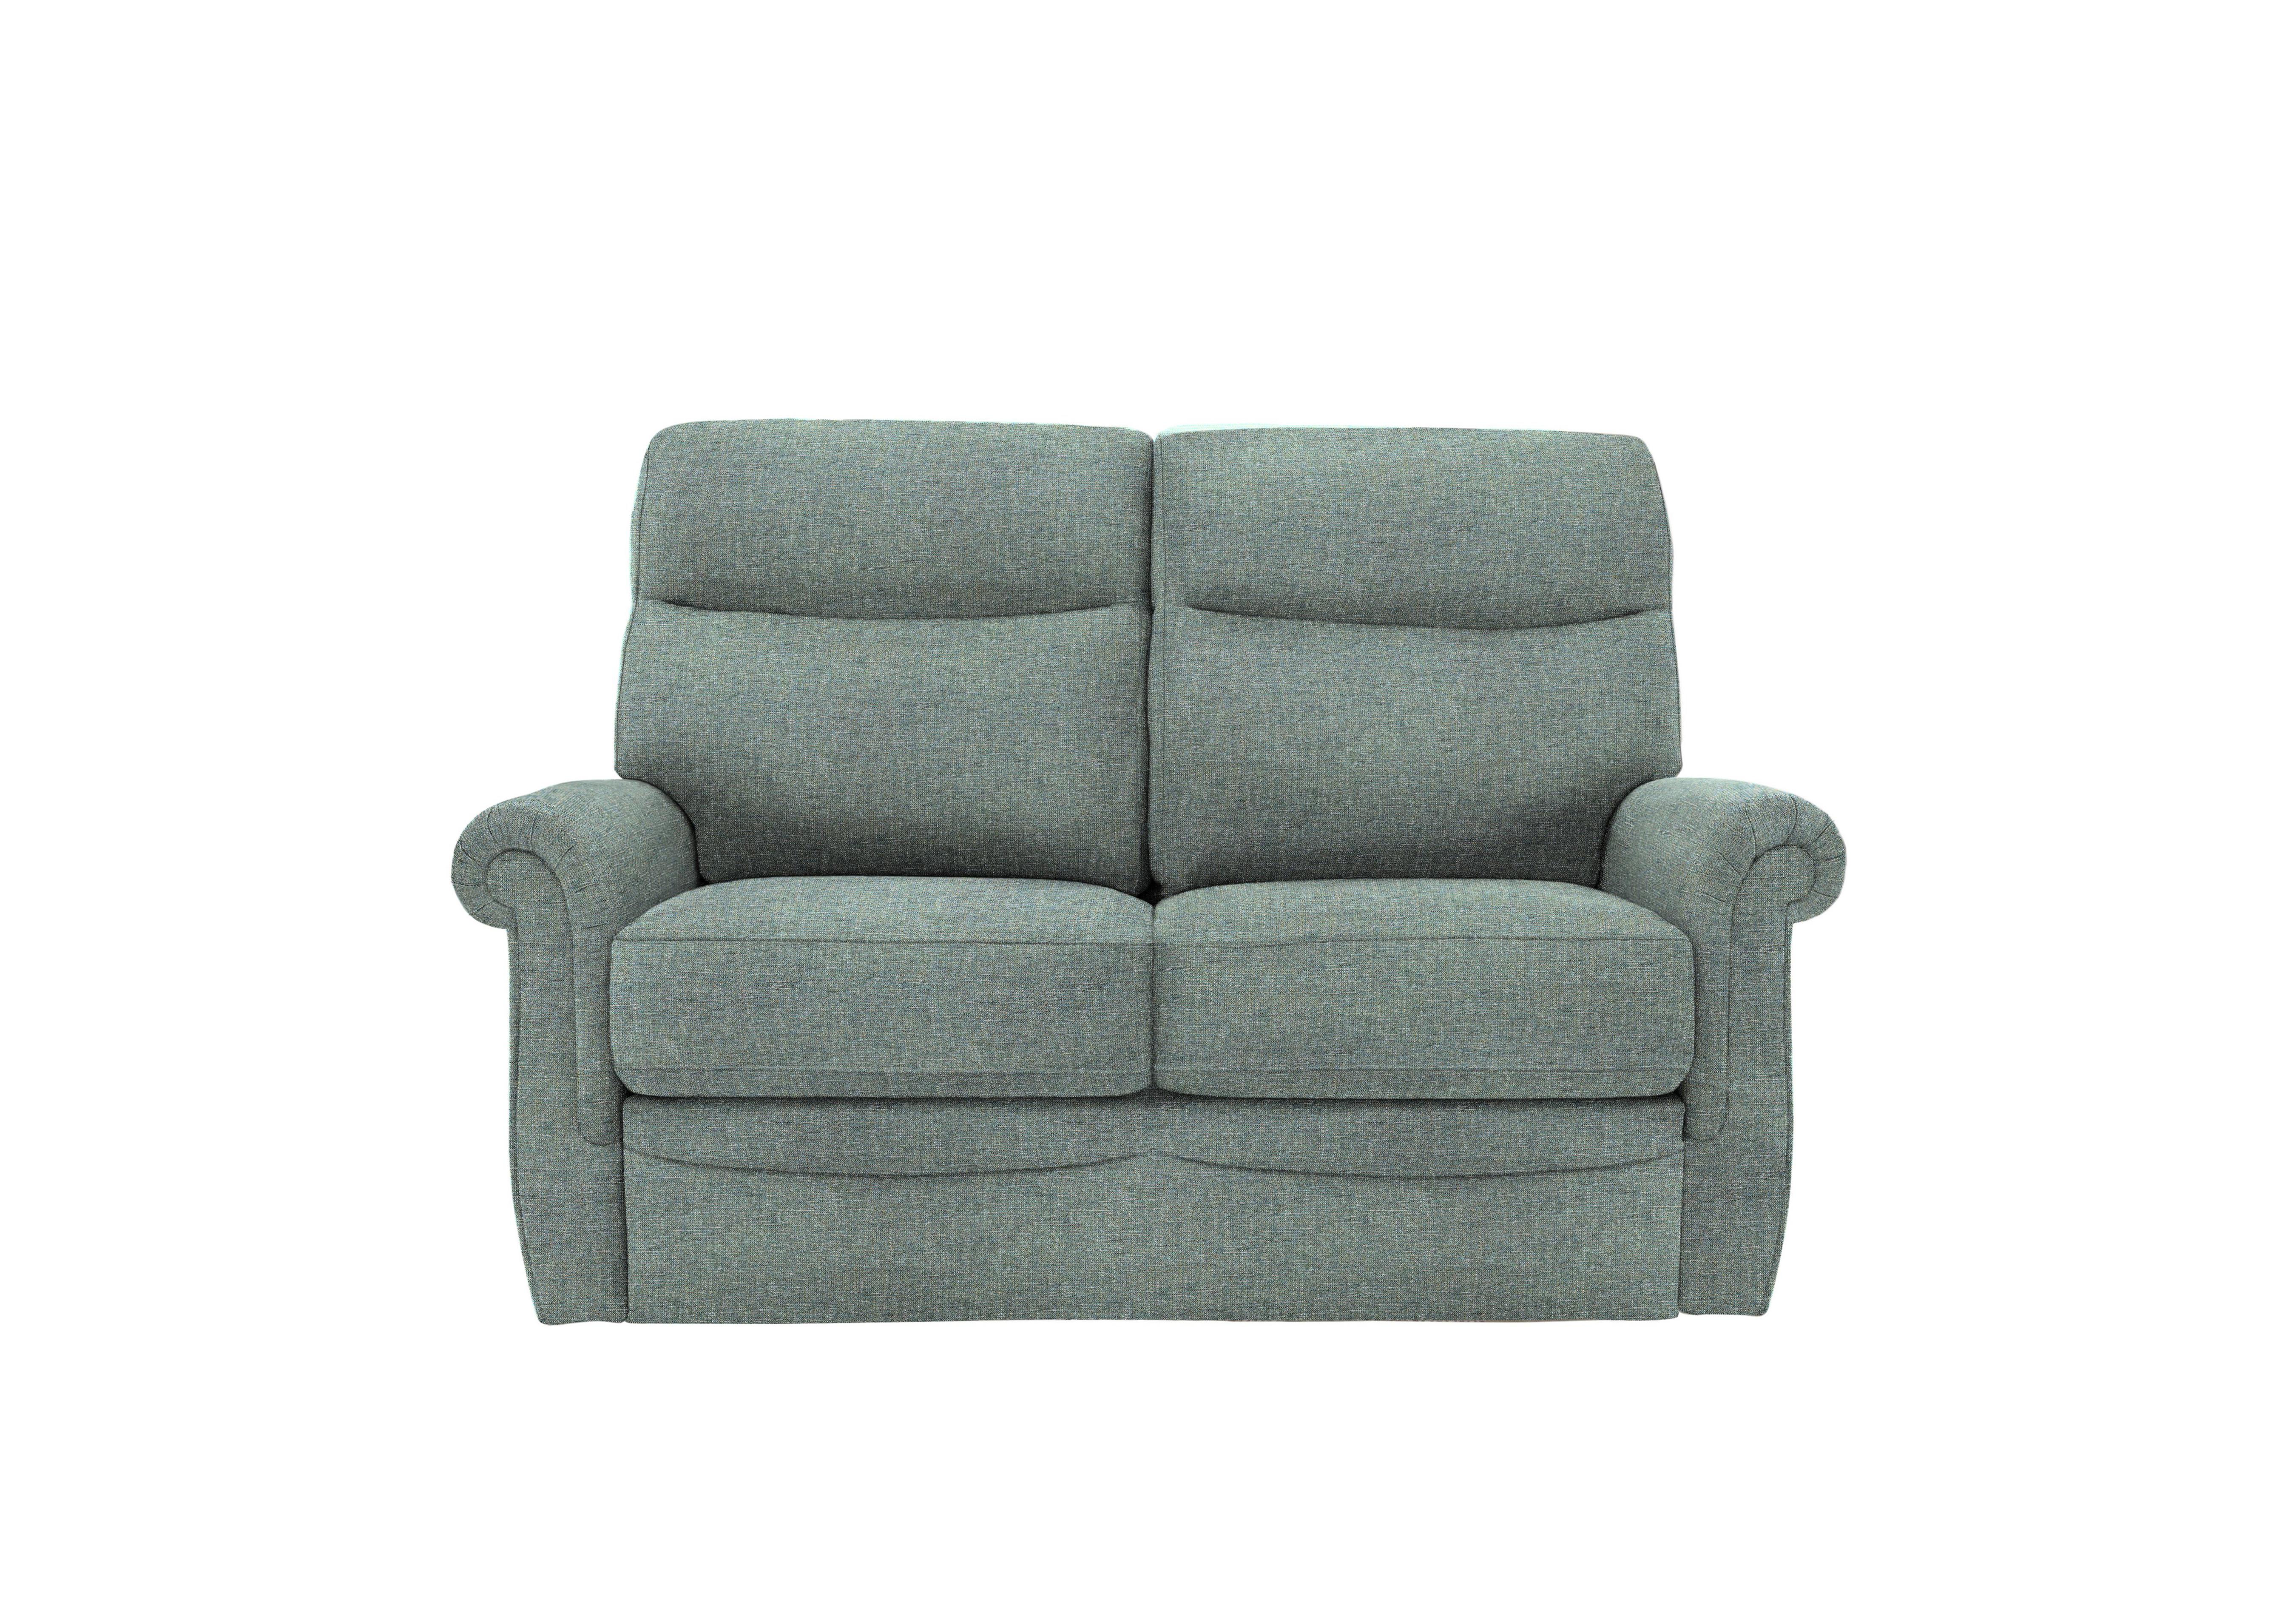 Avon Small 2 Seater Fabric Sofa in A020 Dapple Kingfisher on Furniture Village